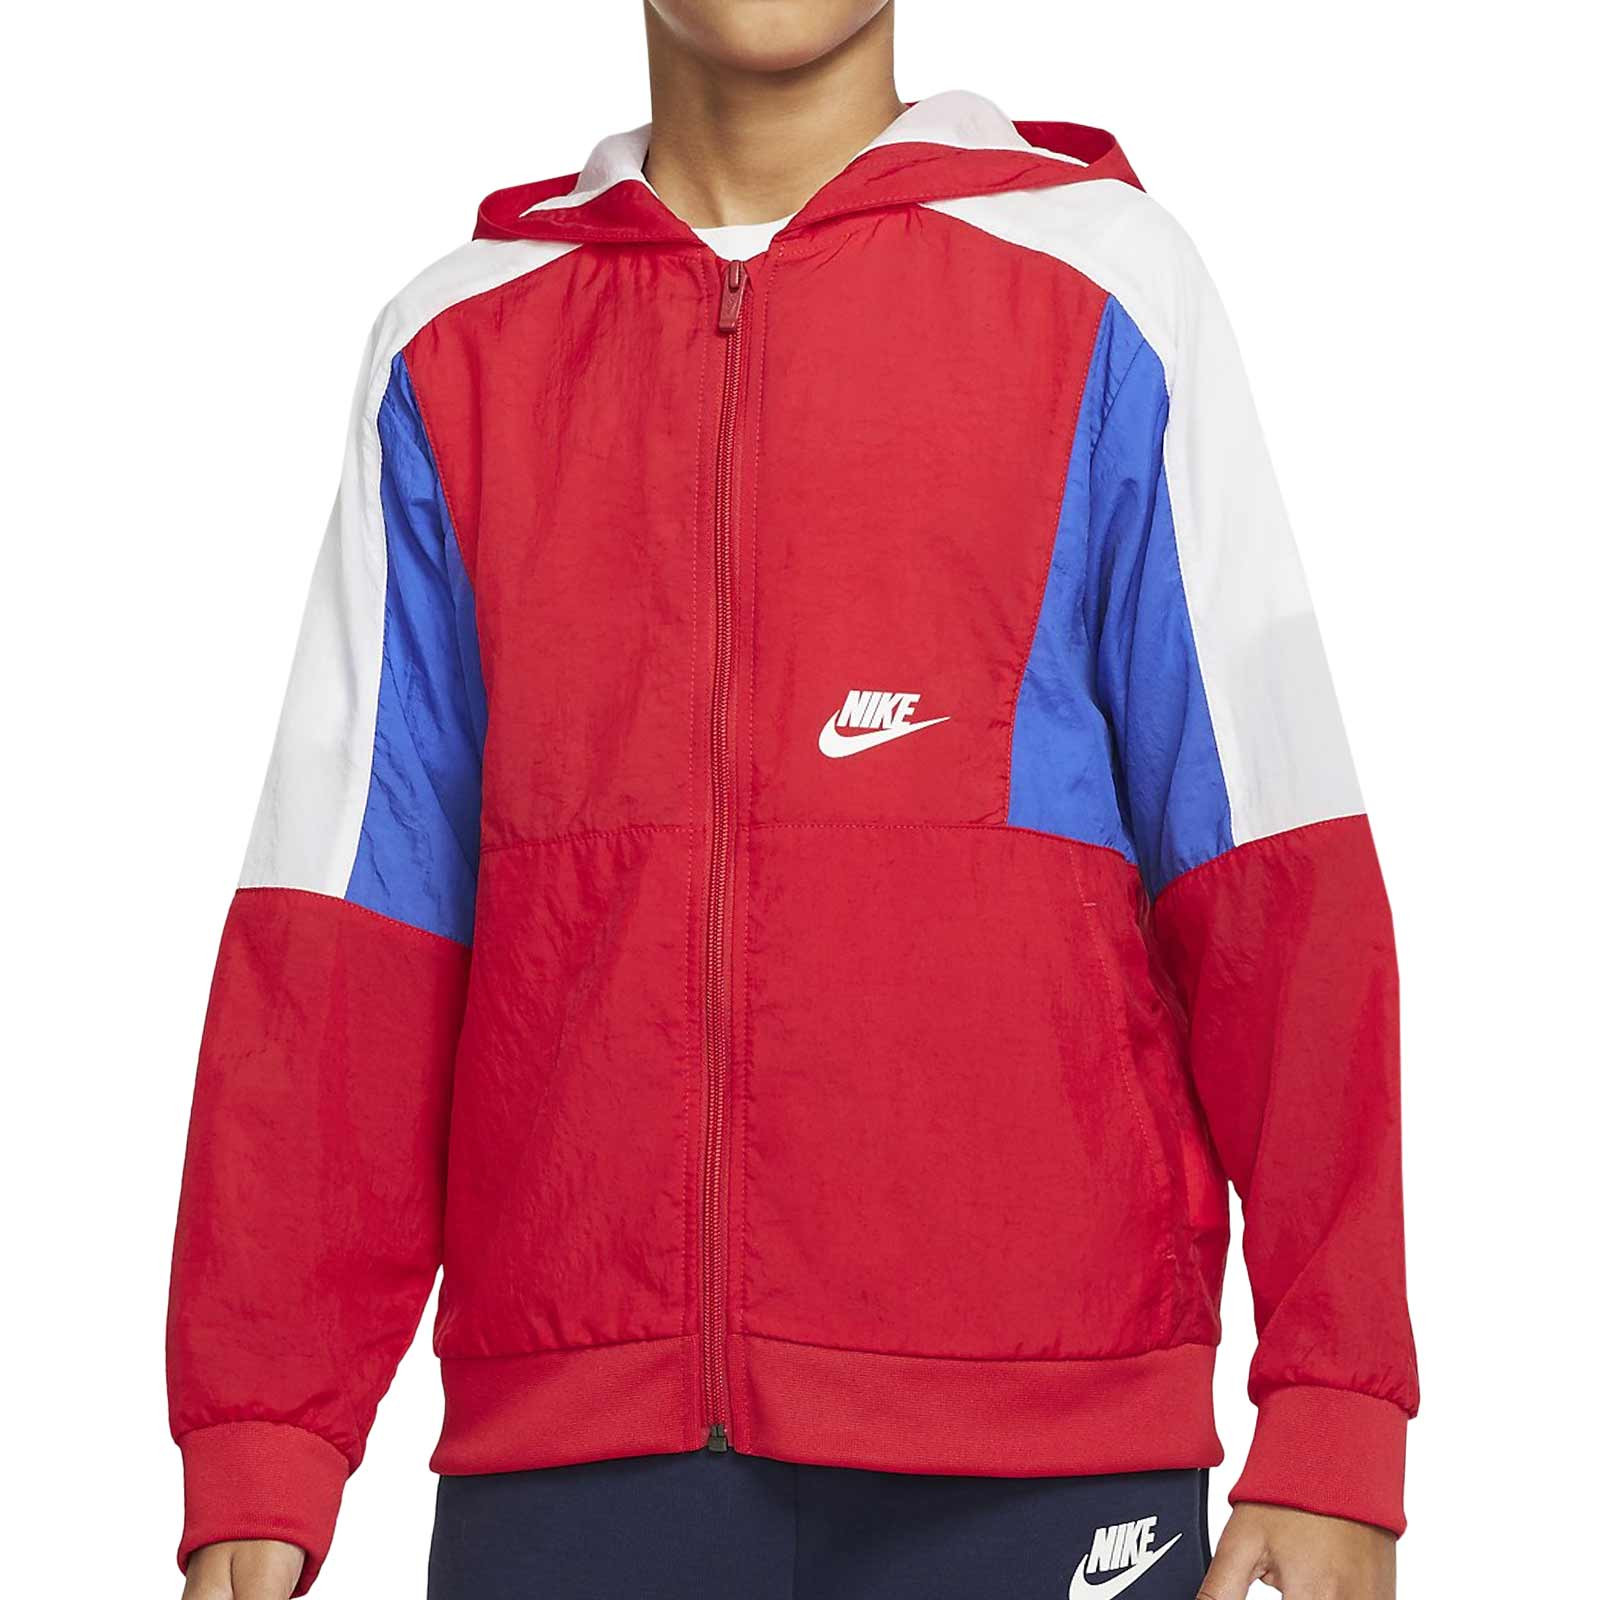 Chaqueta Nike niño Sportswear Woven roja | futbolmaniaKids